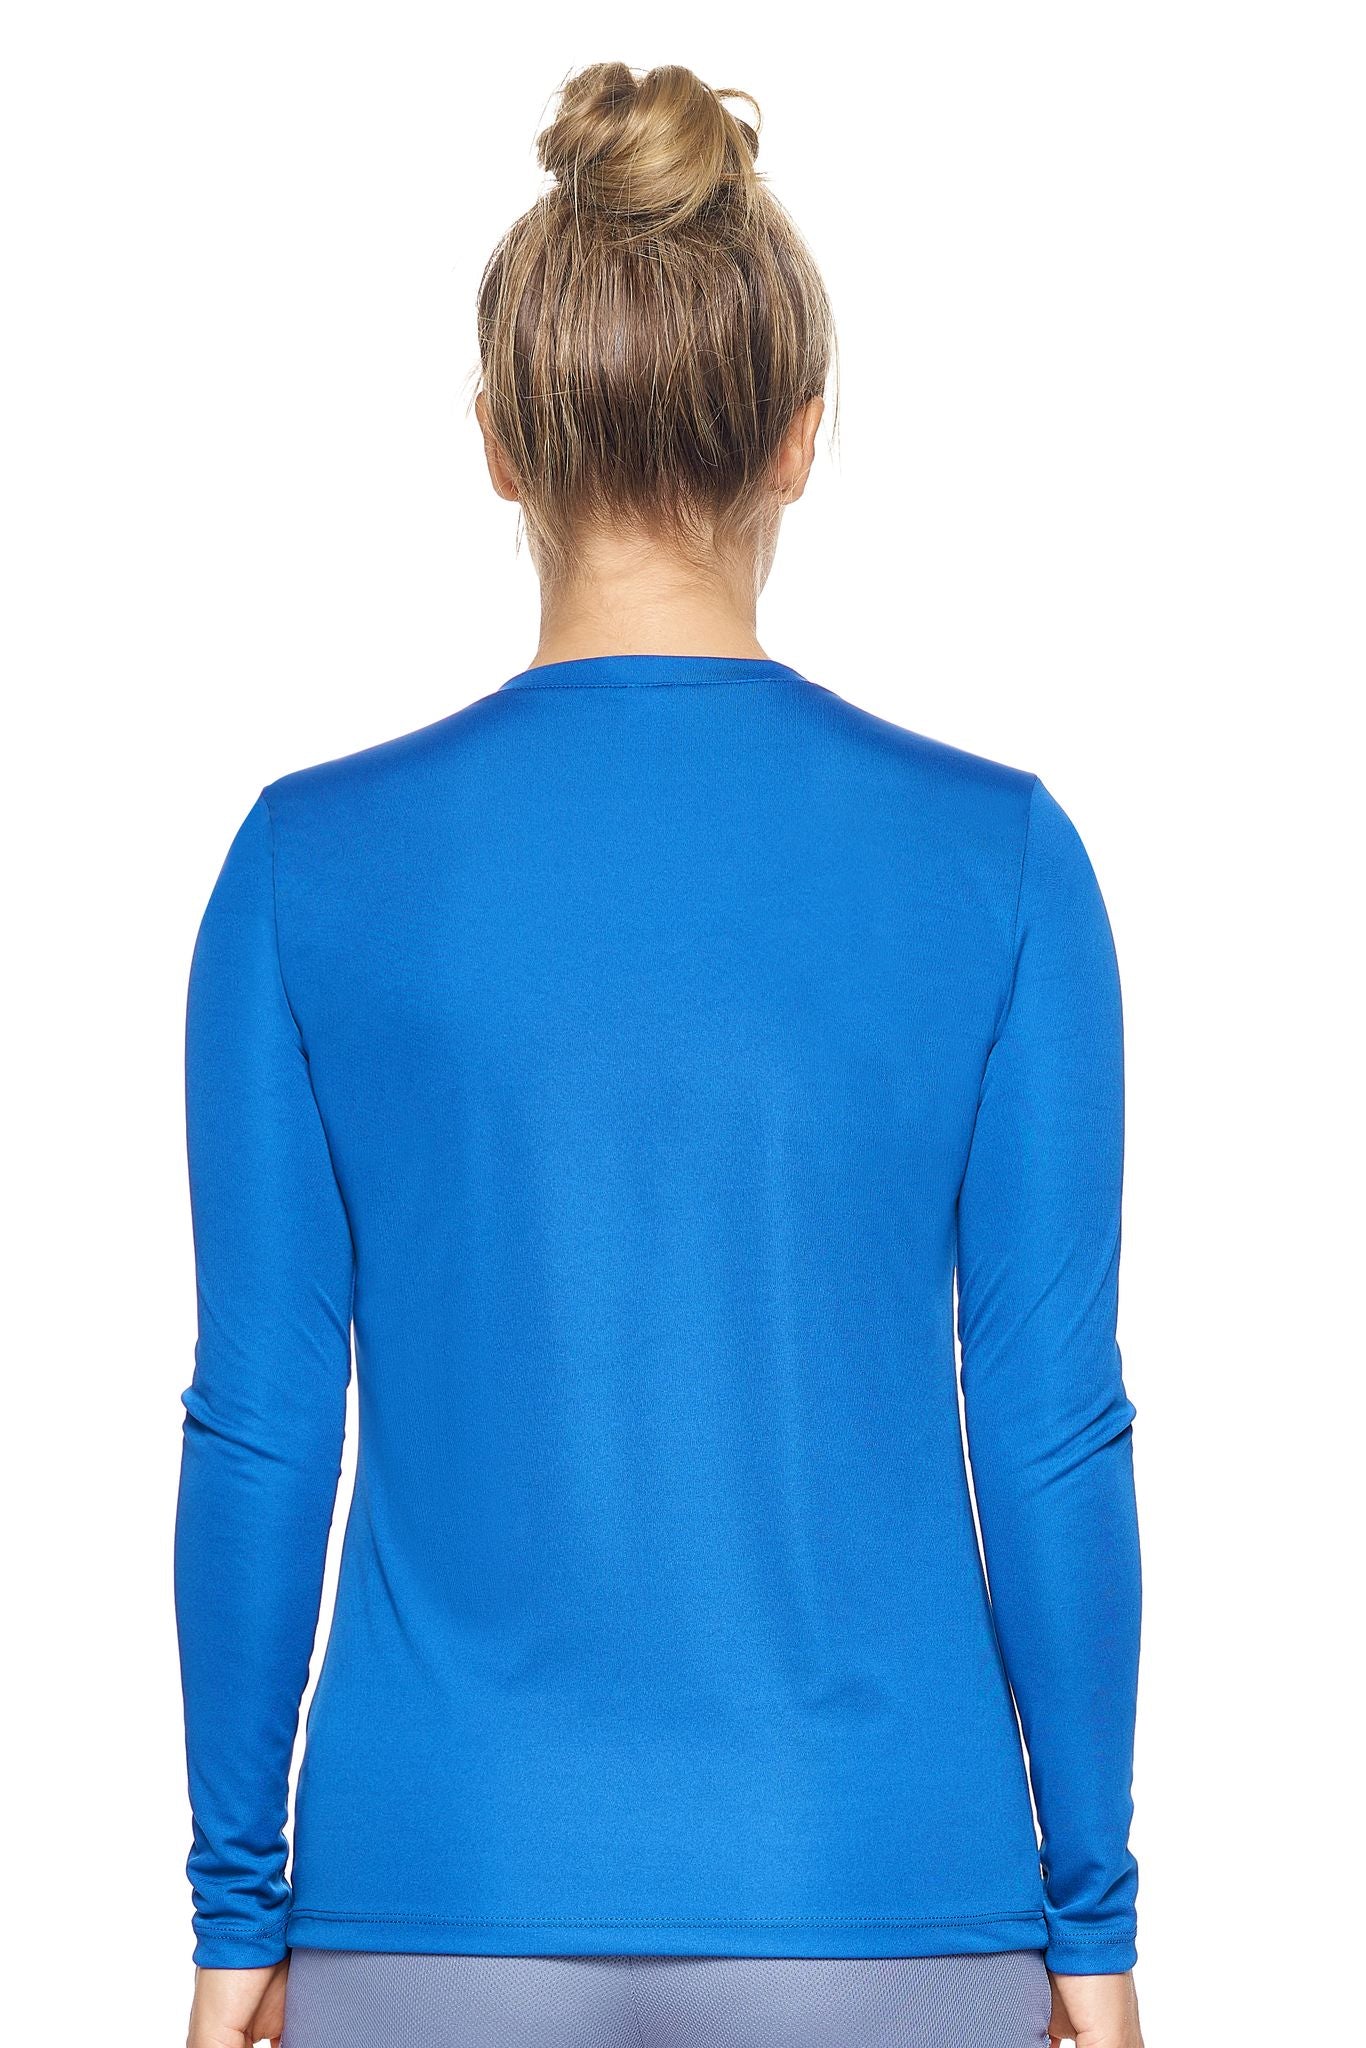 Expert Brand Royal Blue pk MaX™ V-Neck Long Sleeve Expert Tee Image 3#royal-blue